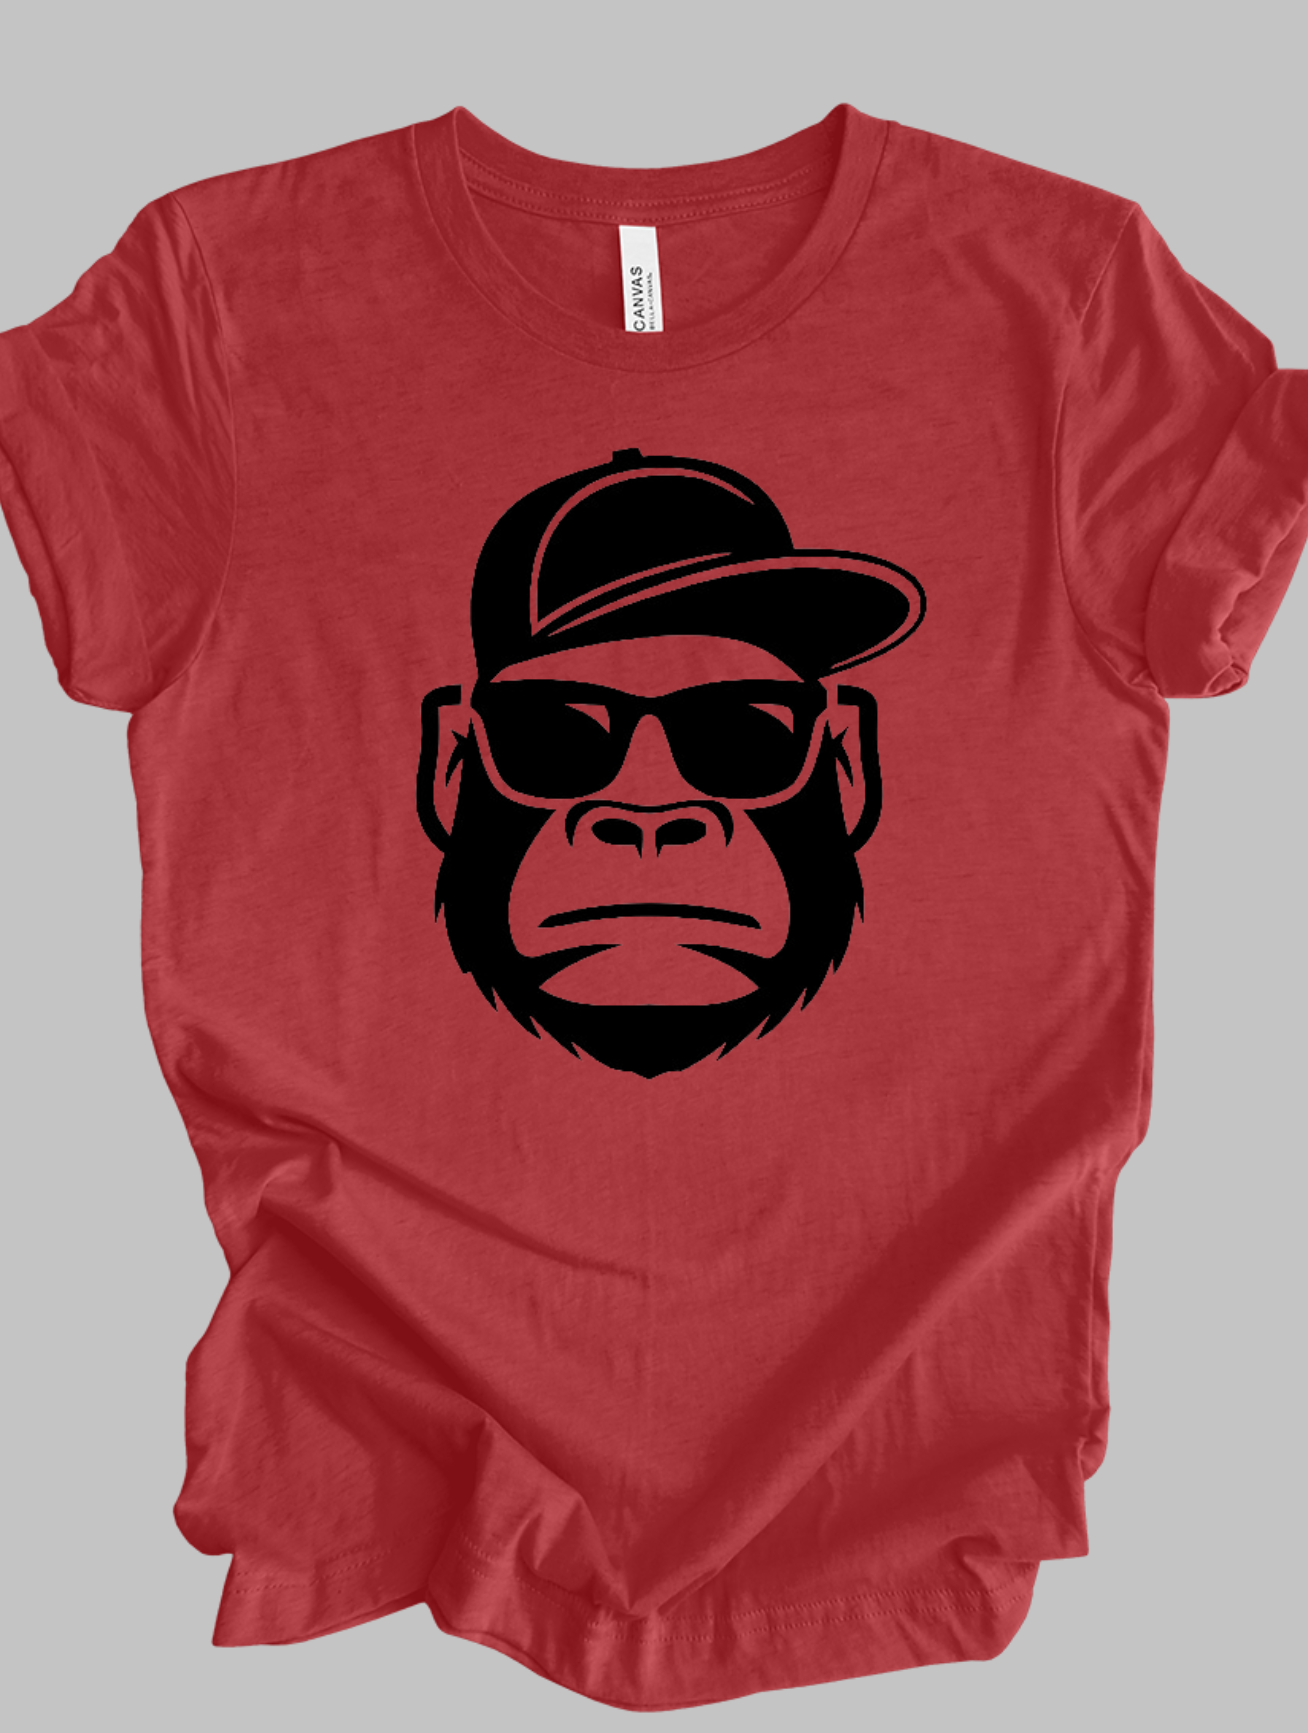 Gorilla with Sunglasses - Unisex T-shirt